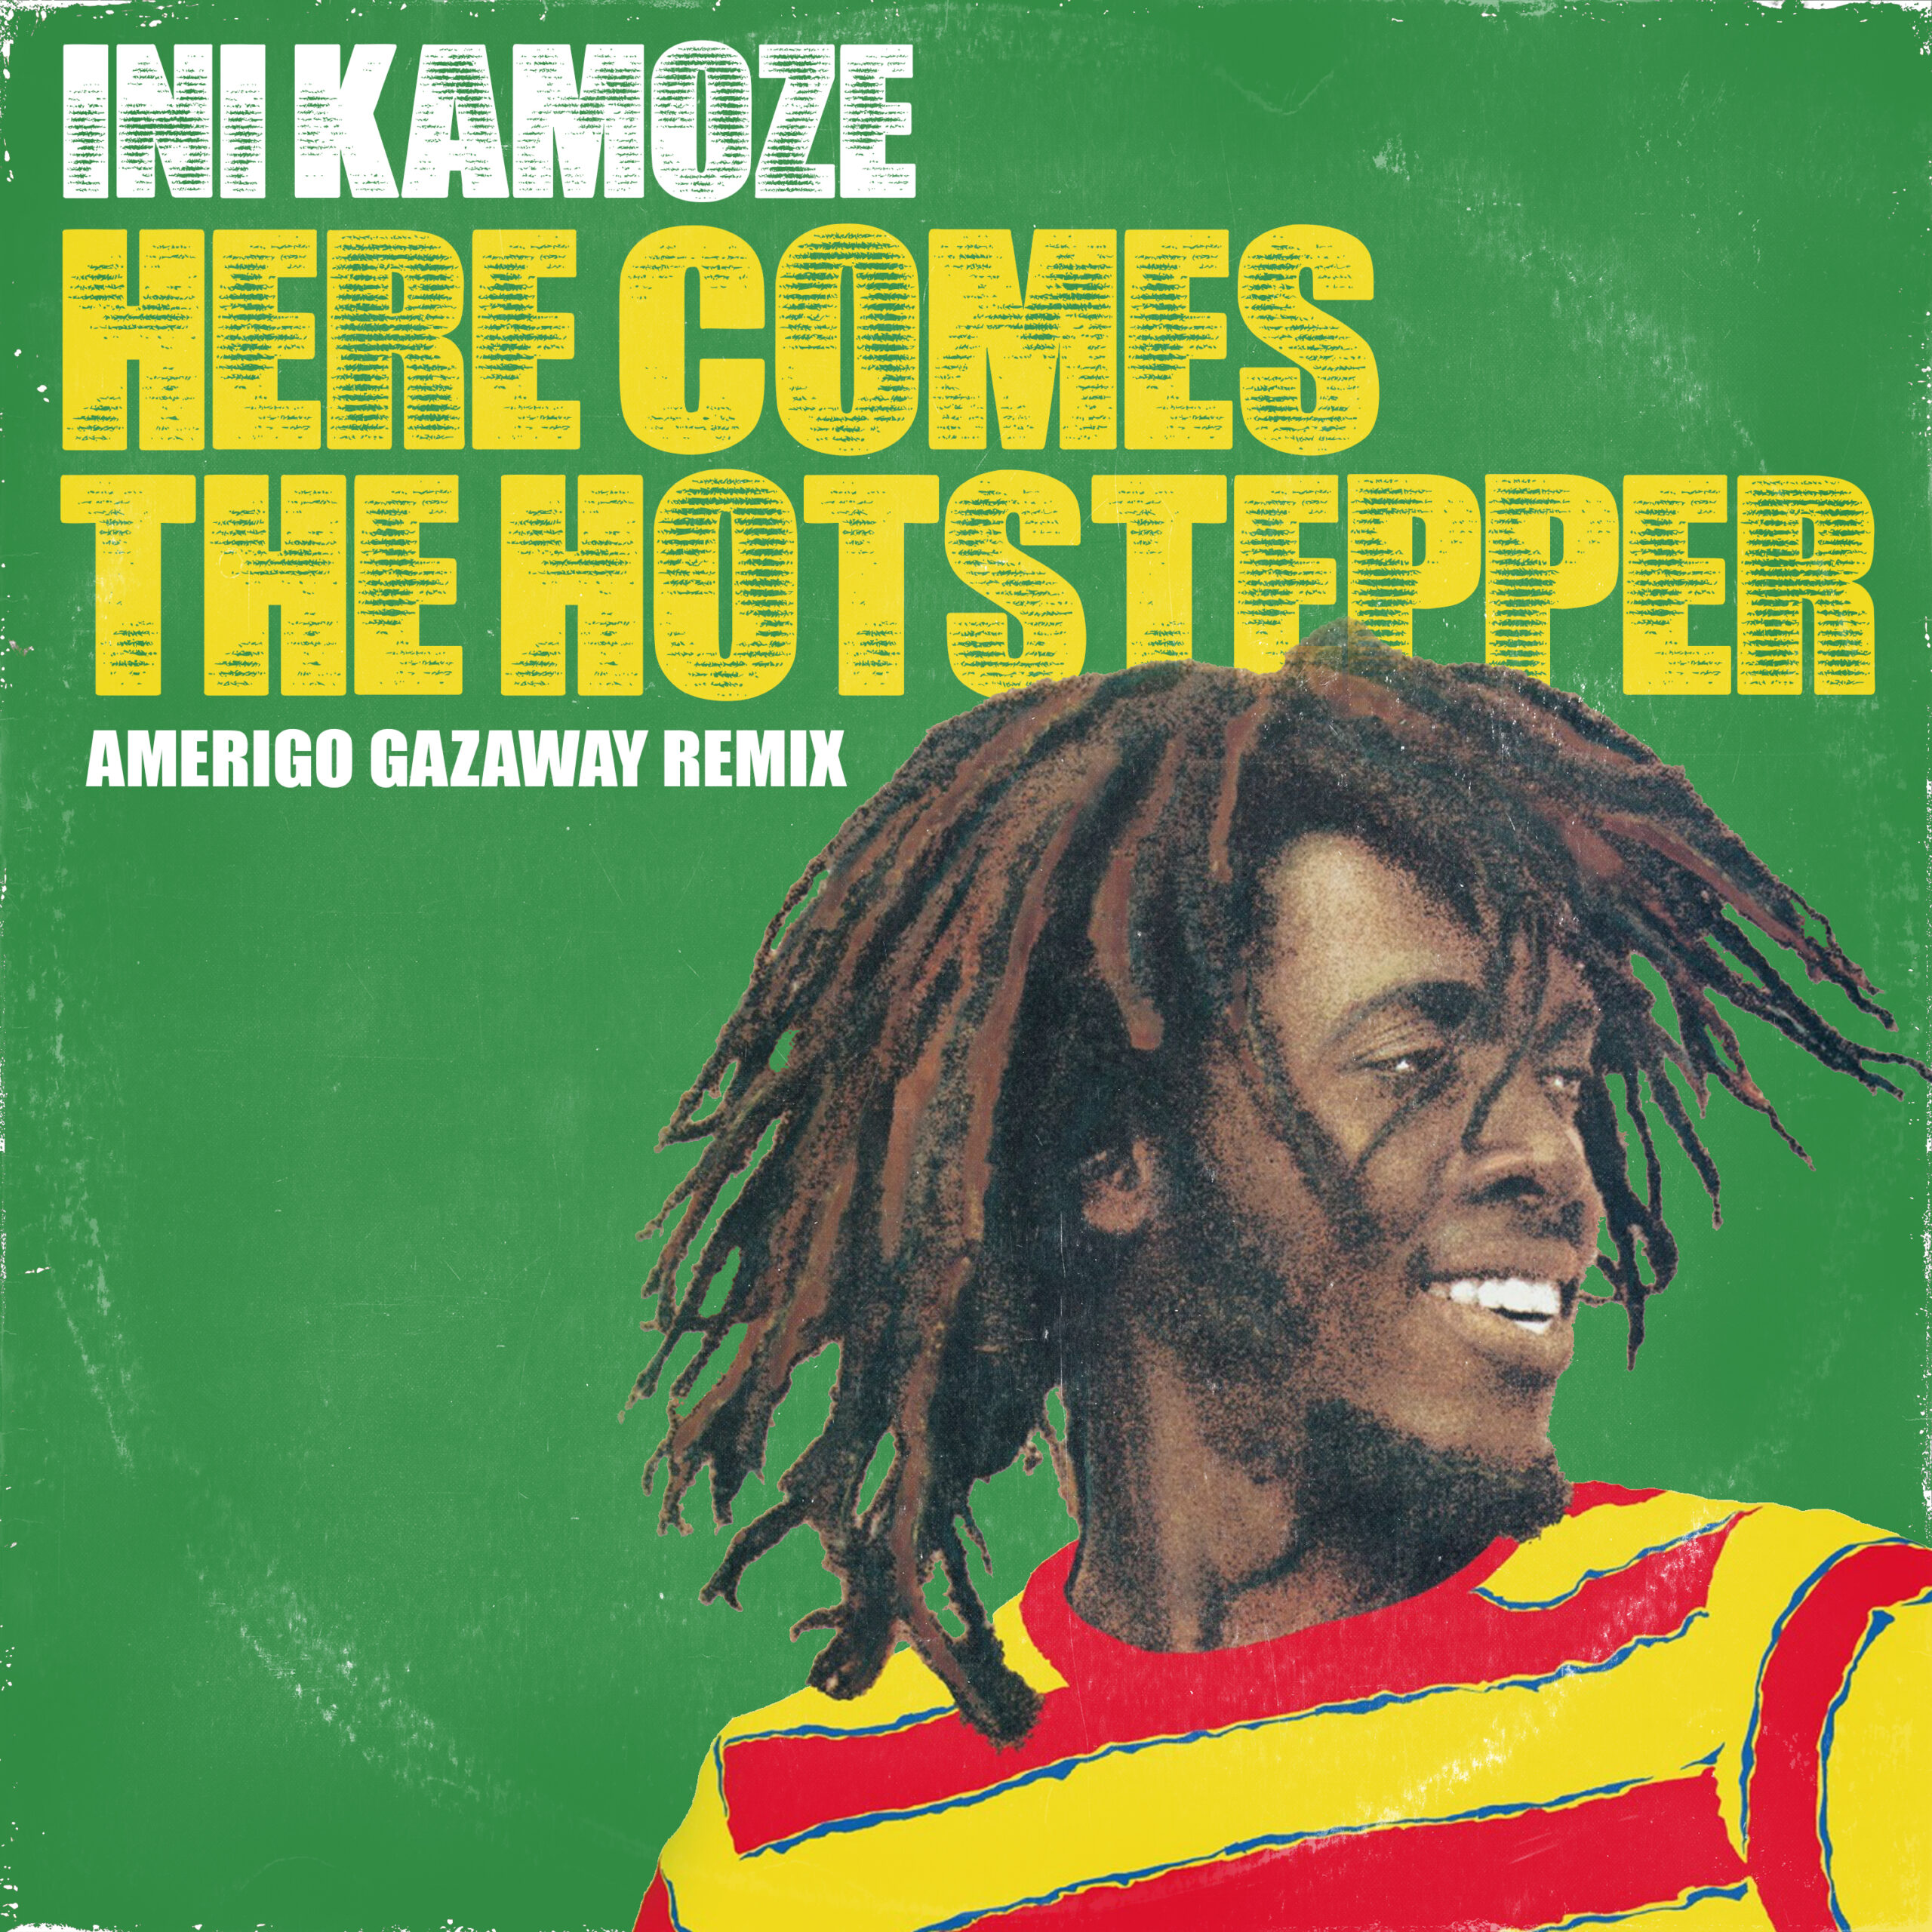 Ini Kamoze - Here Comes The Hotstepper (Amerigo Gazaway Remix)